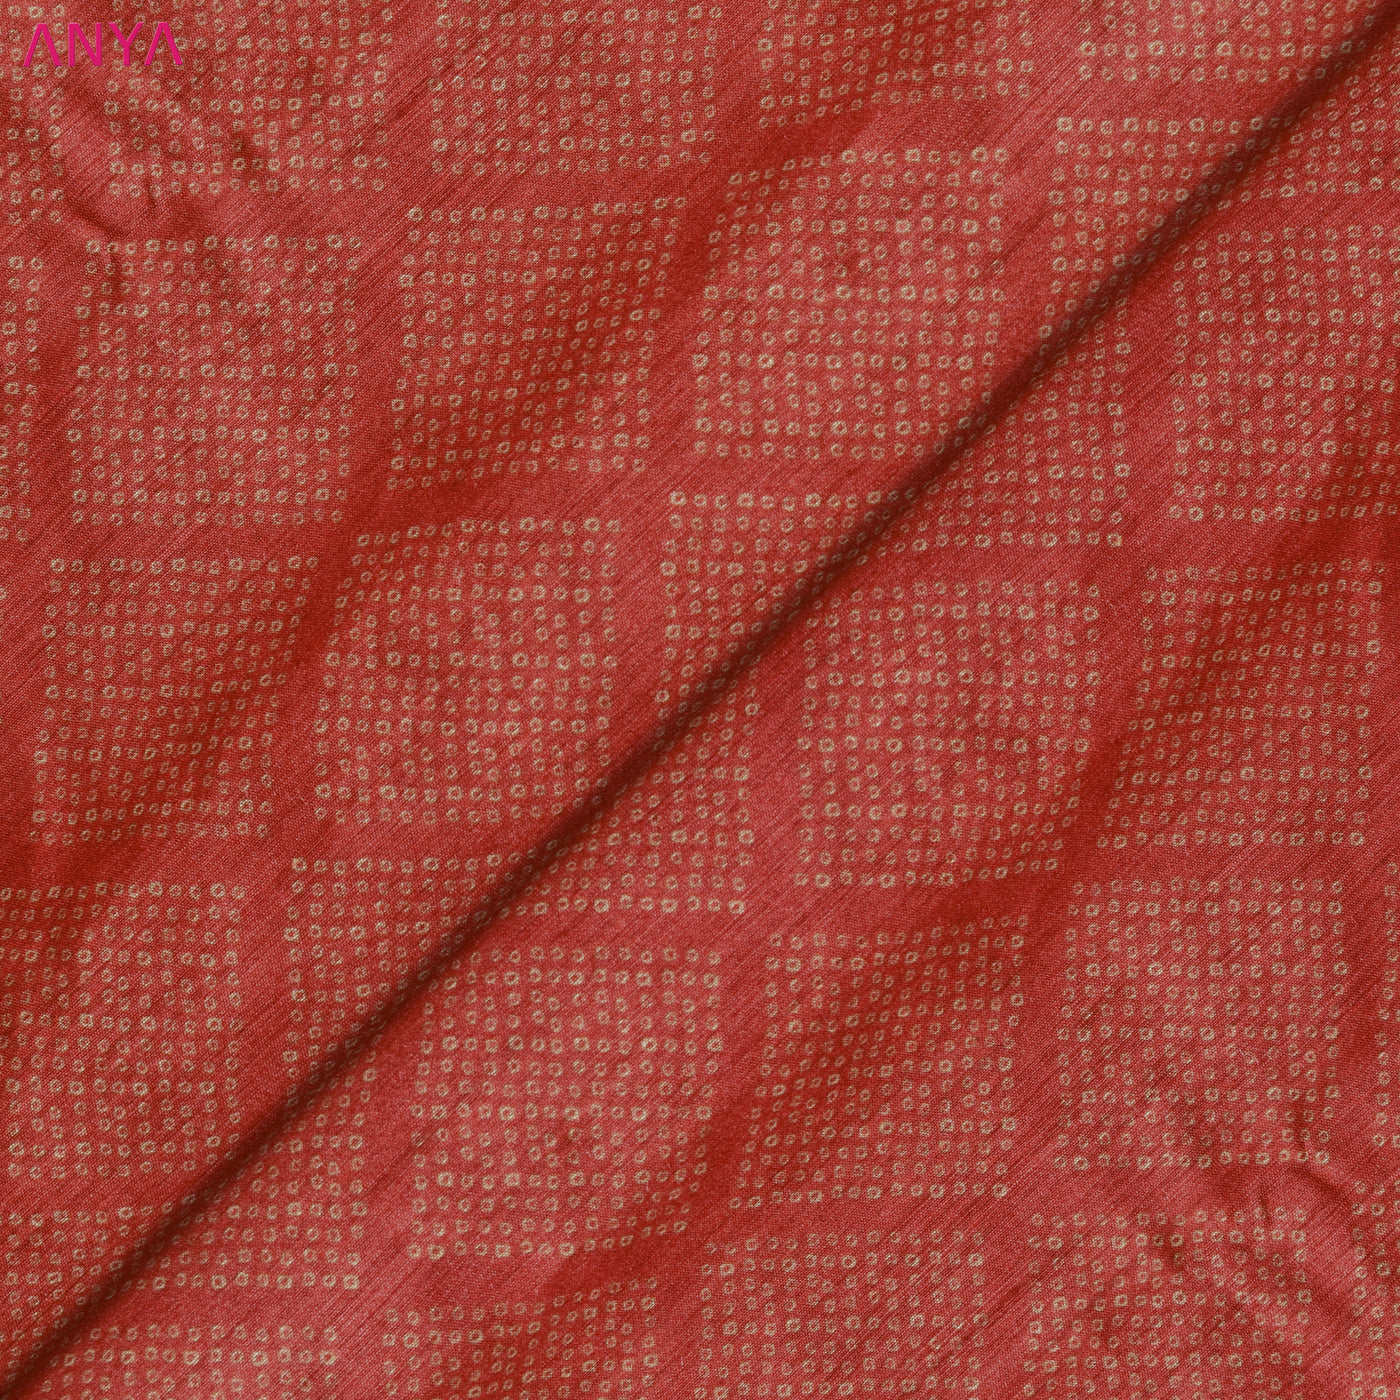 Red Tussar Silk Fabric with Diamond Dots Design